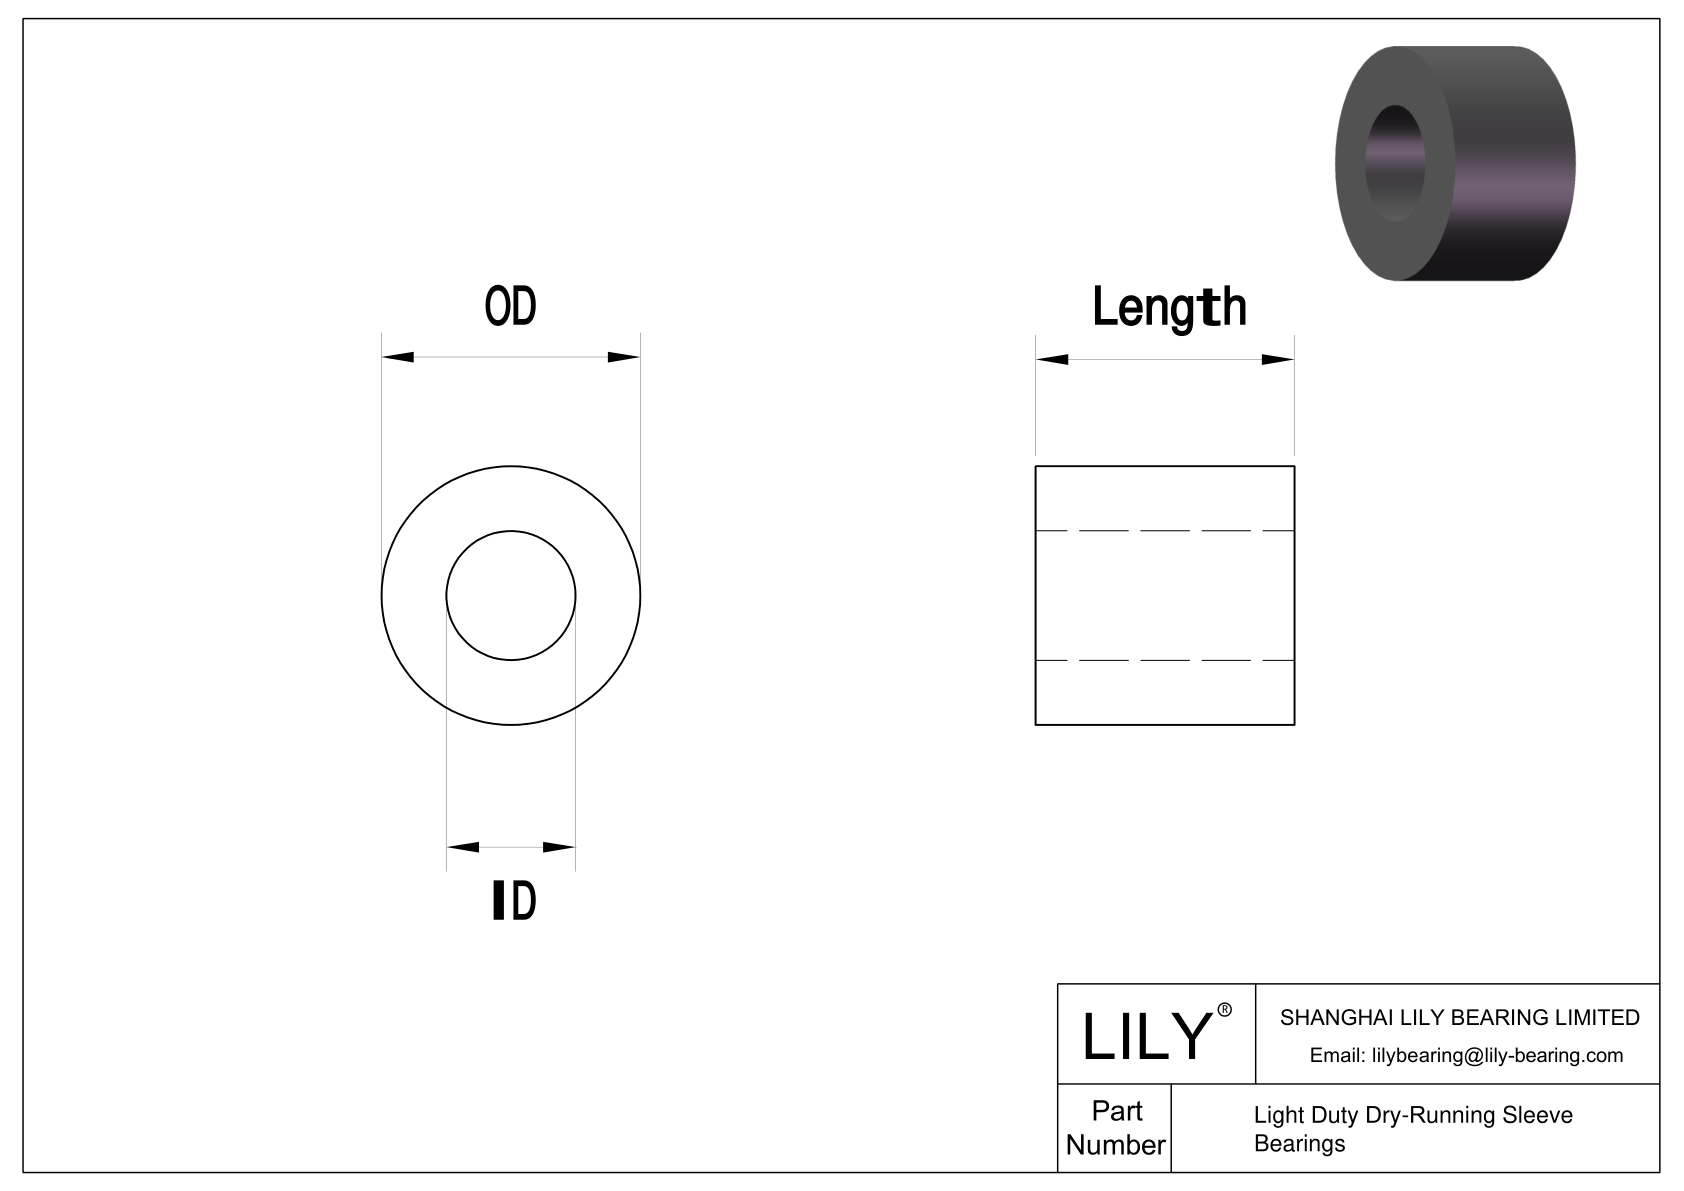 6389K854 Light Duty Dry-Running Sleeve Bearings cad drawing